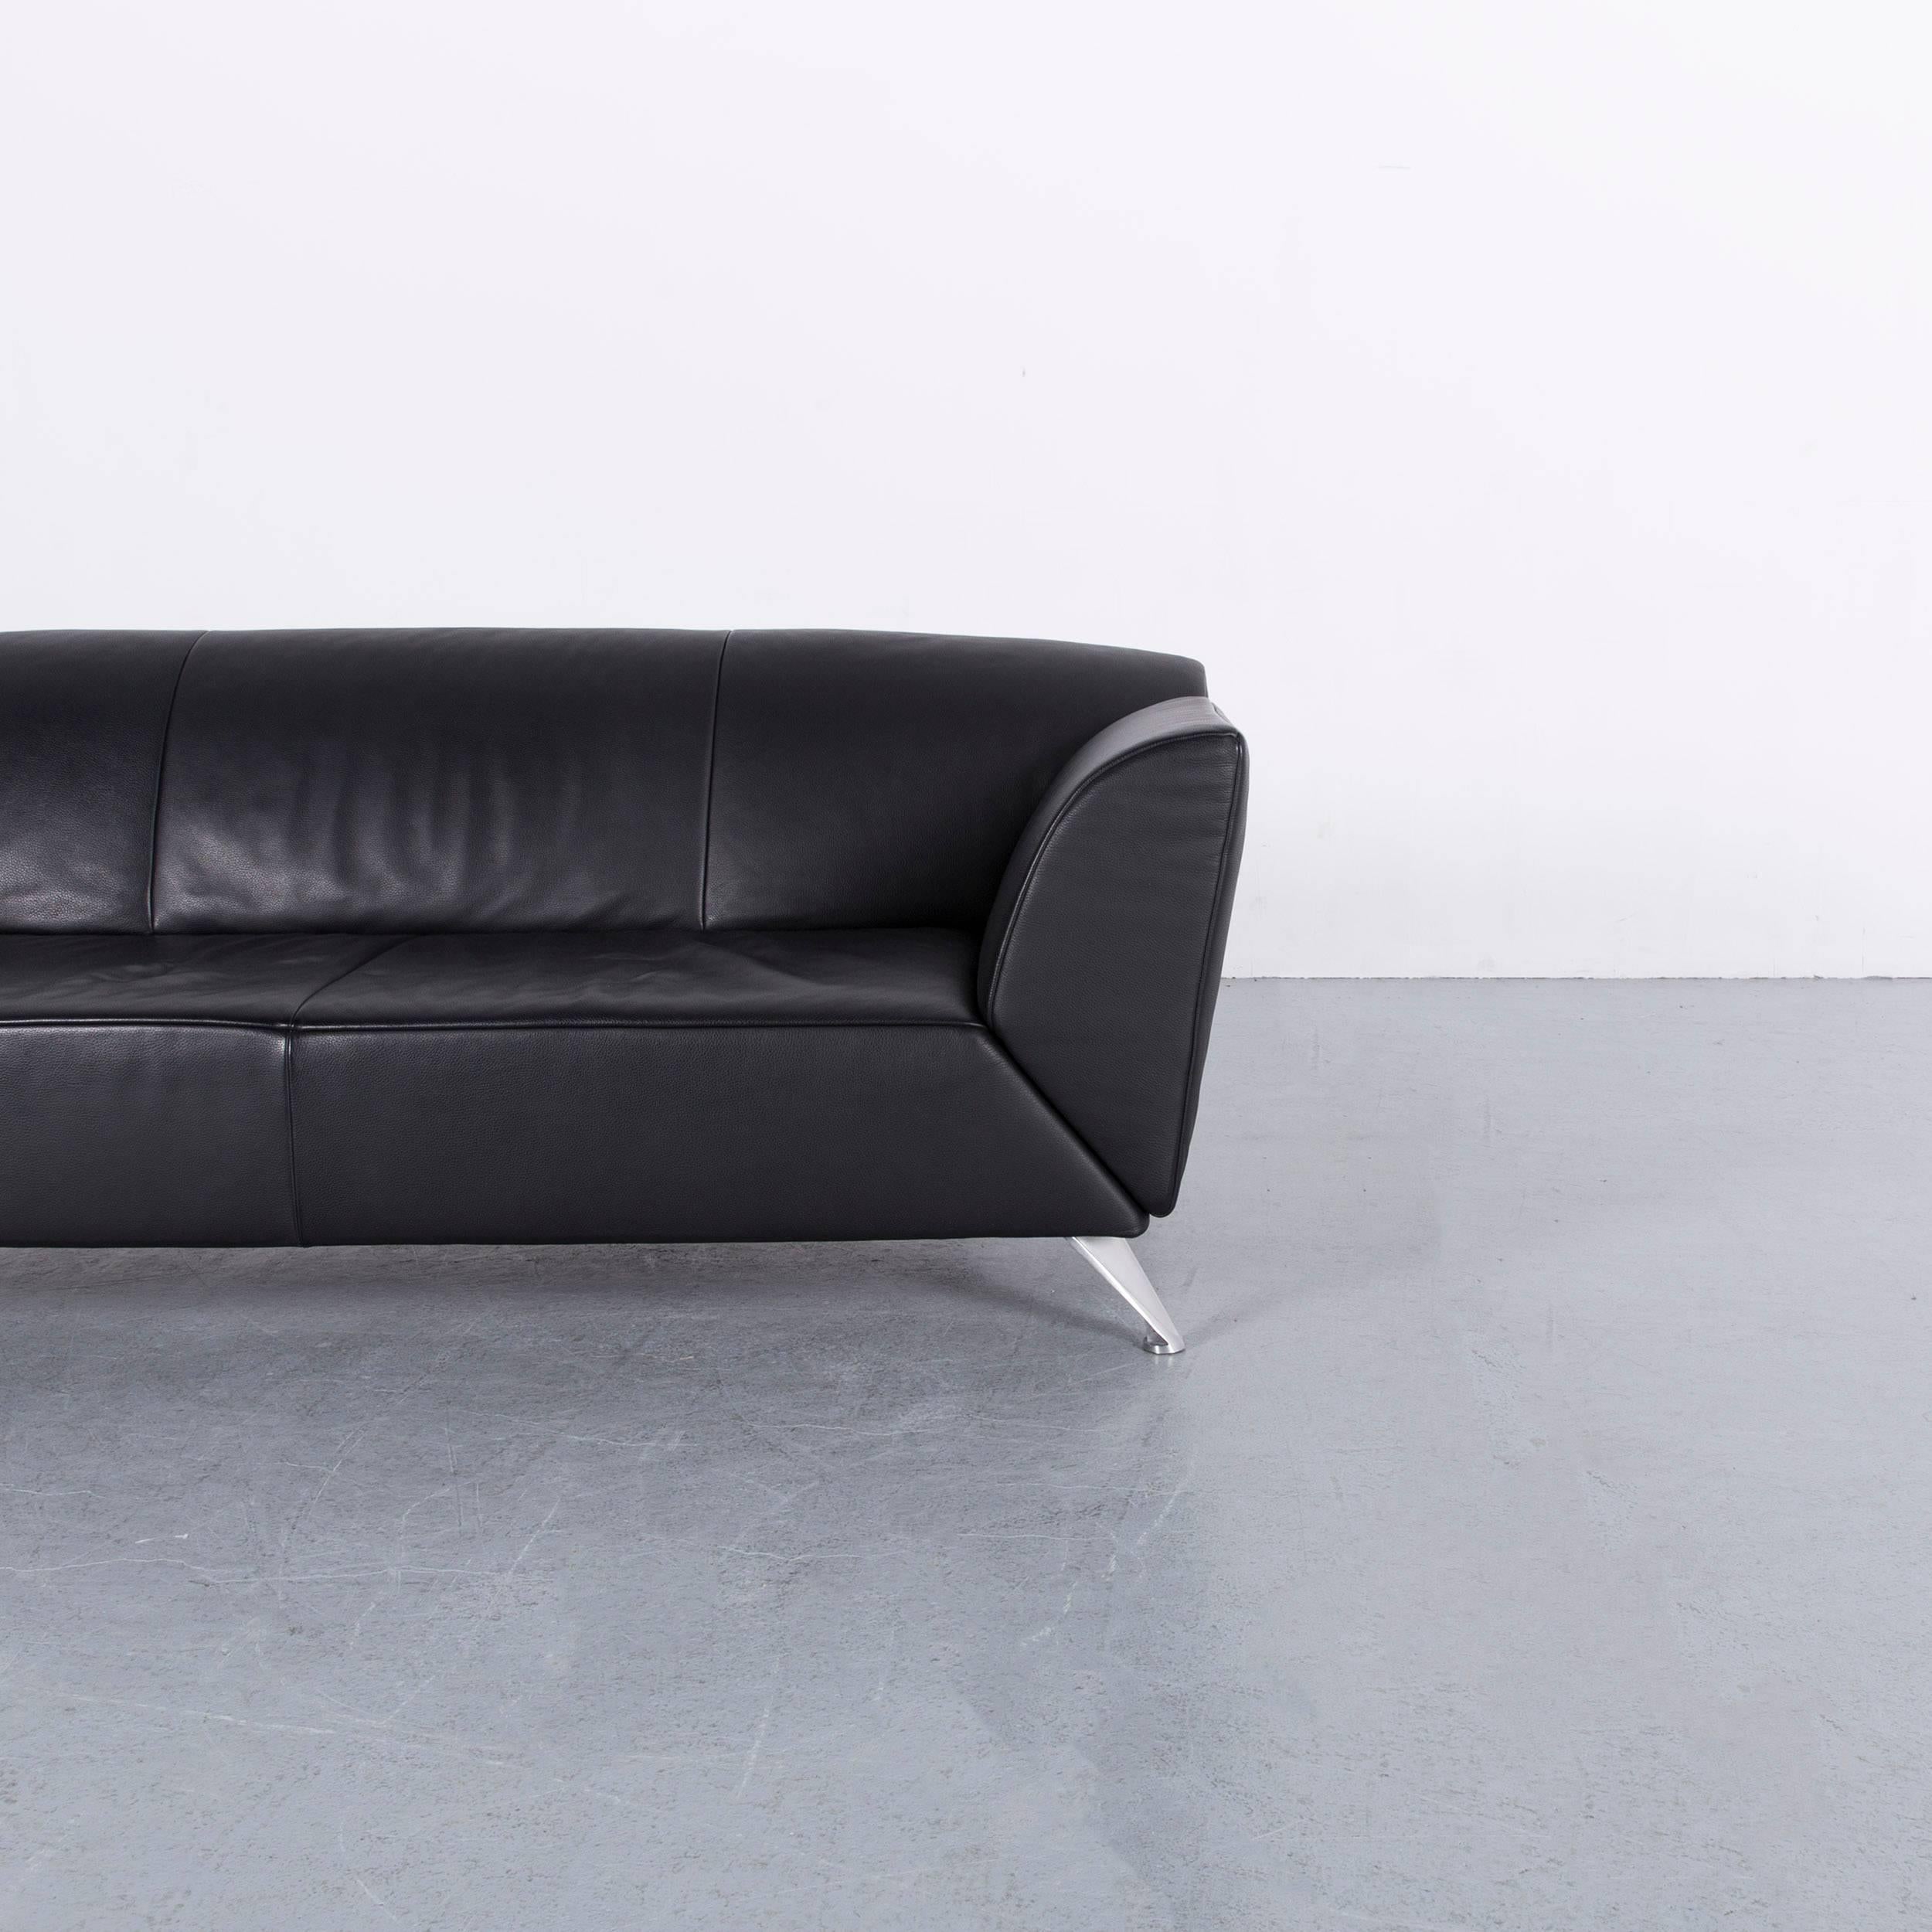 Belgian Jori JR 9700 Leather Sofa Black Three-Seat Couch